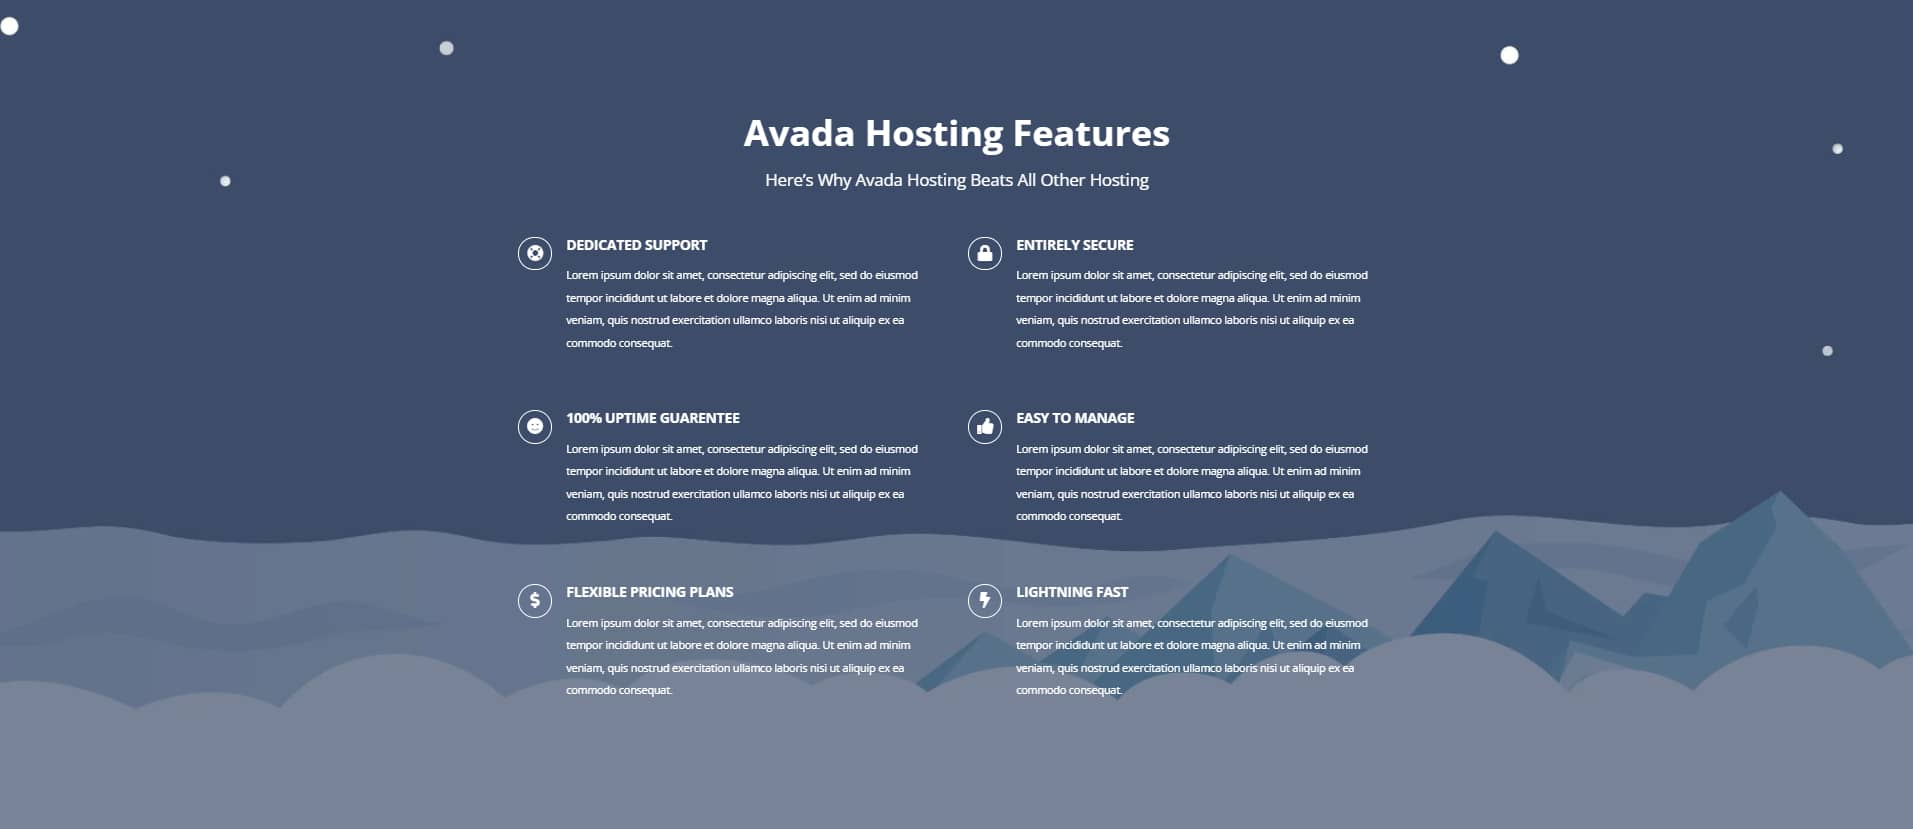 Avada Hosting Features